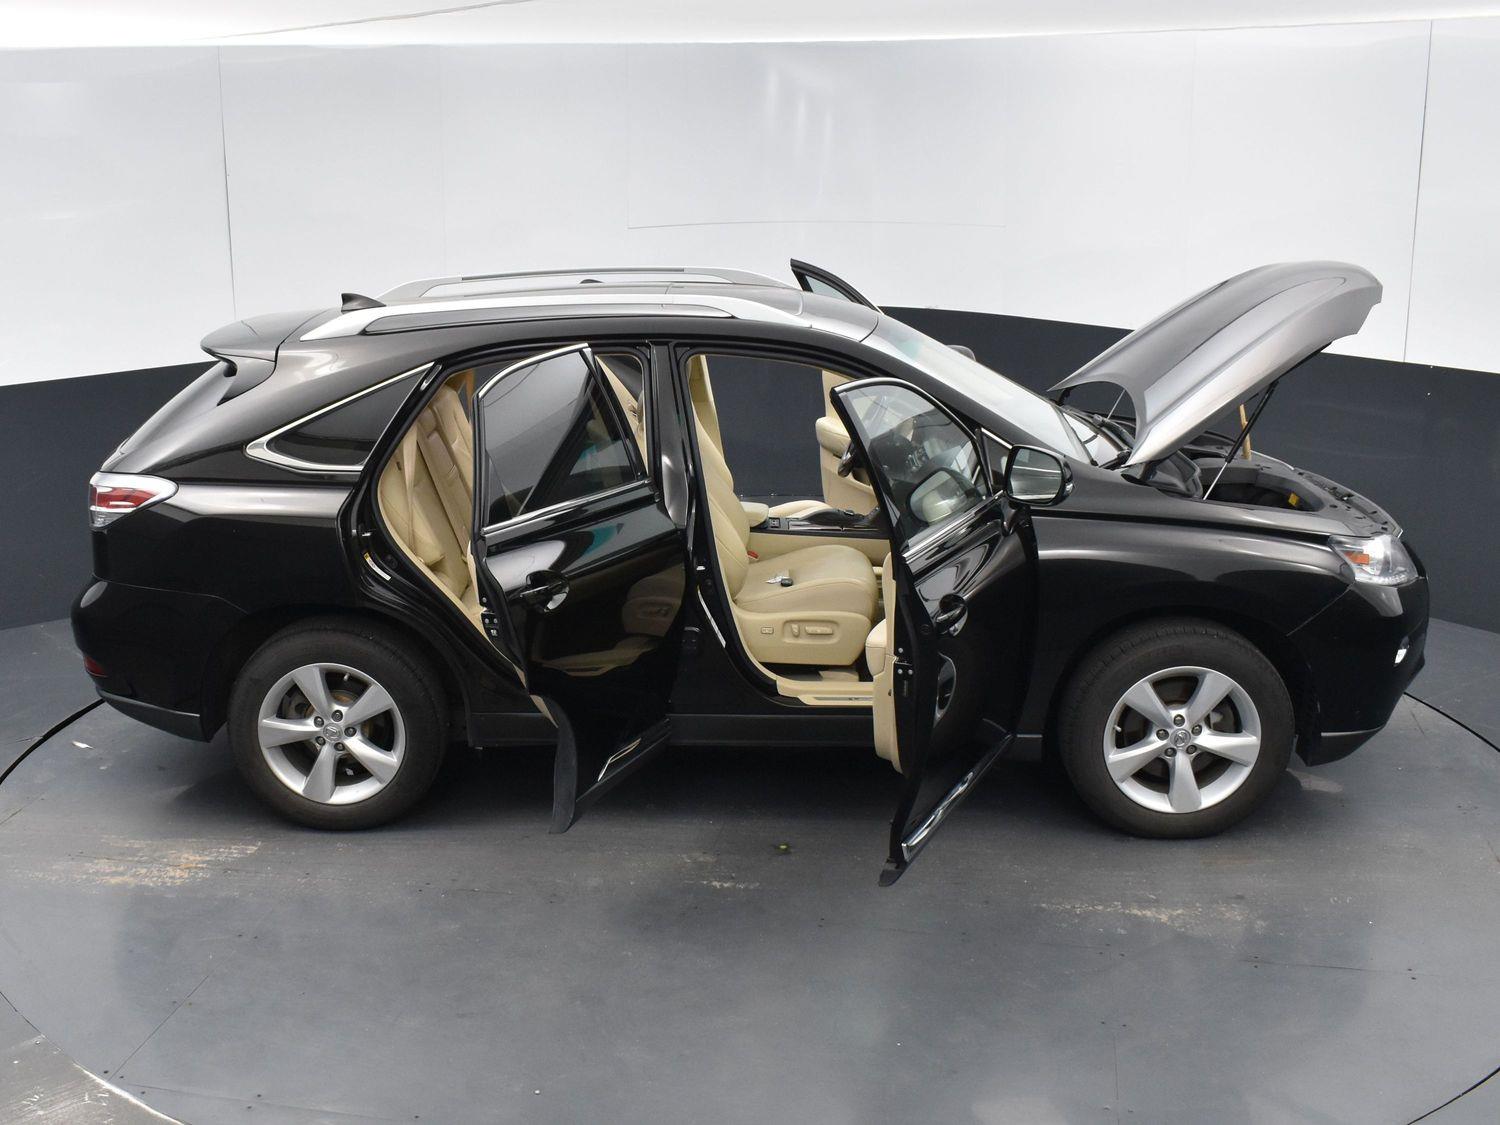 Used 2014 Lexus RX 350  SUV for sale in Grand Island NE